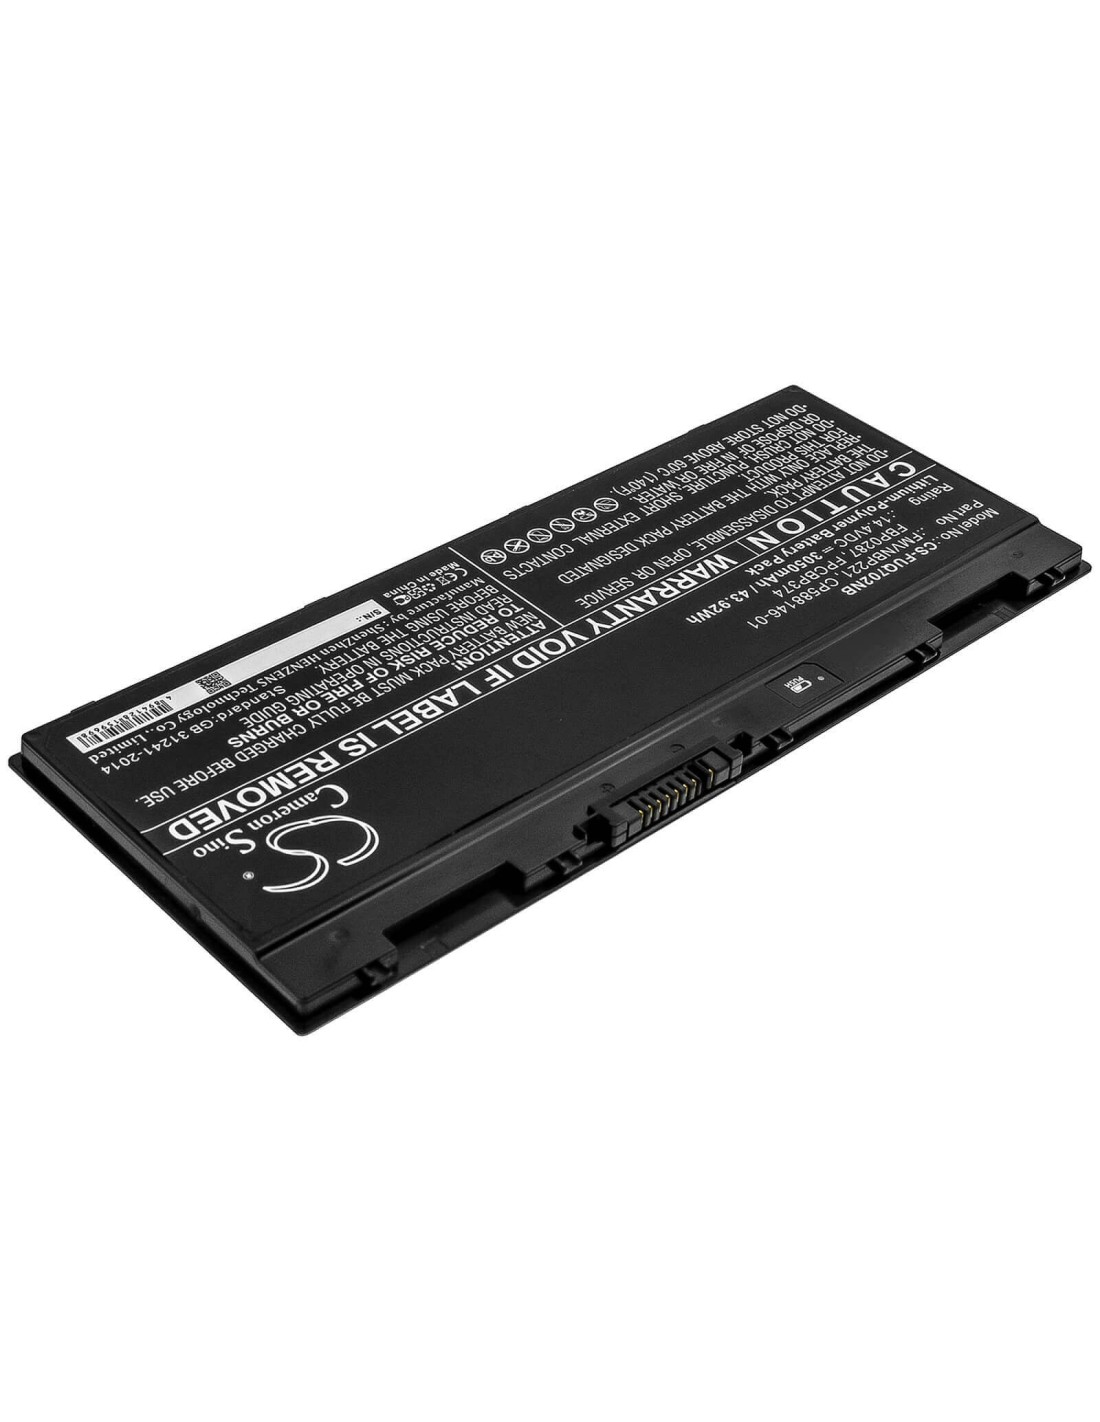 Battery for Fujitsu, Lifebook Q702, Stylistic Q702 14.4V, 3050mAh - 43.92Wh